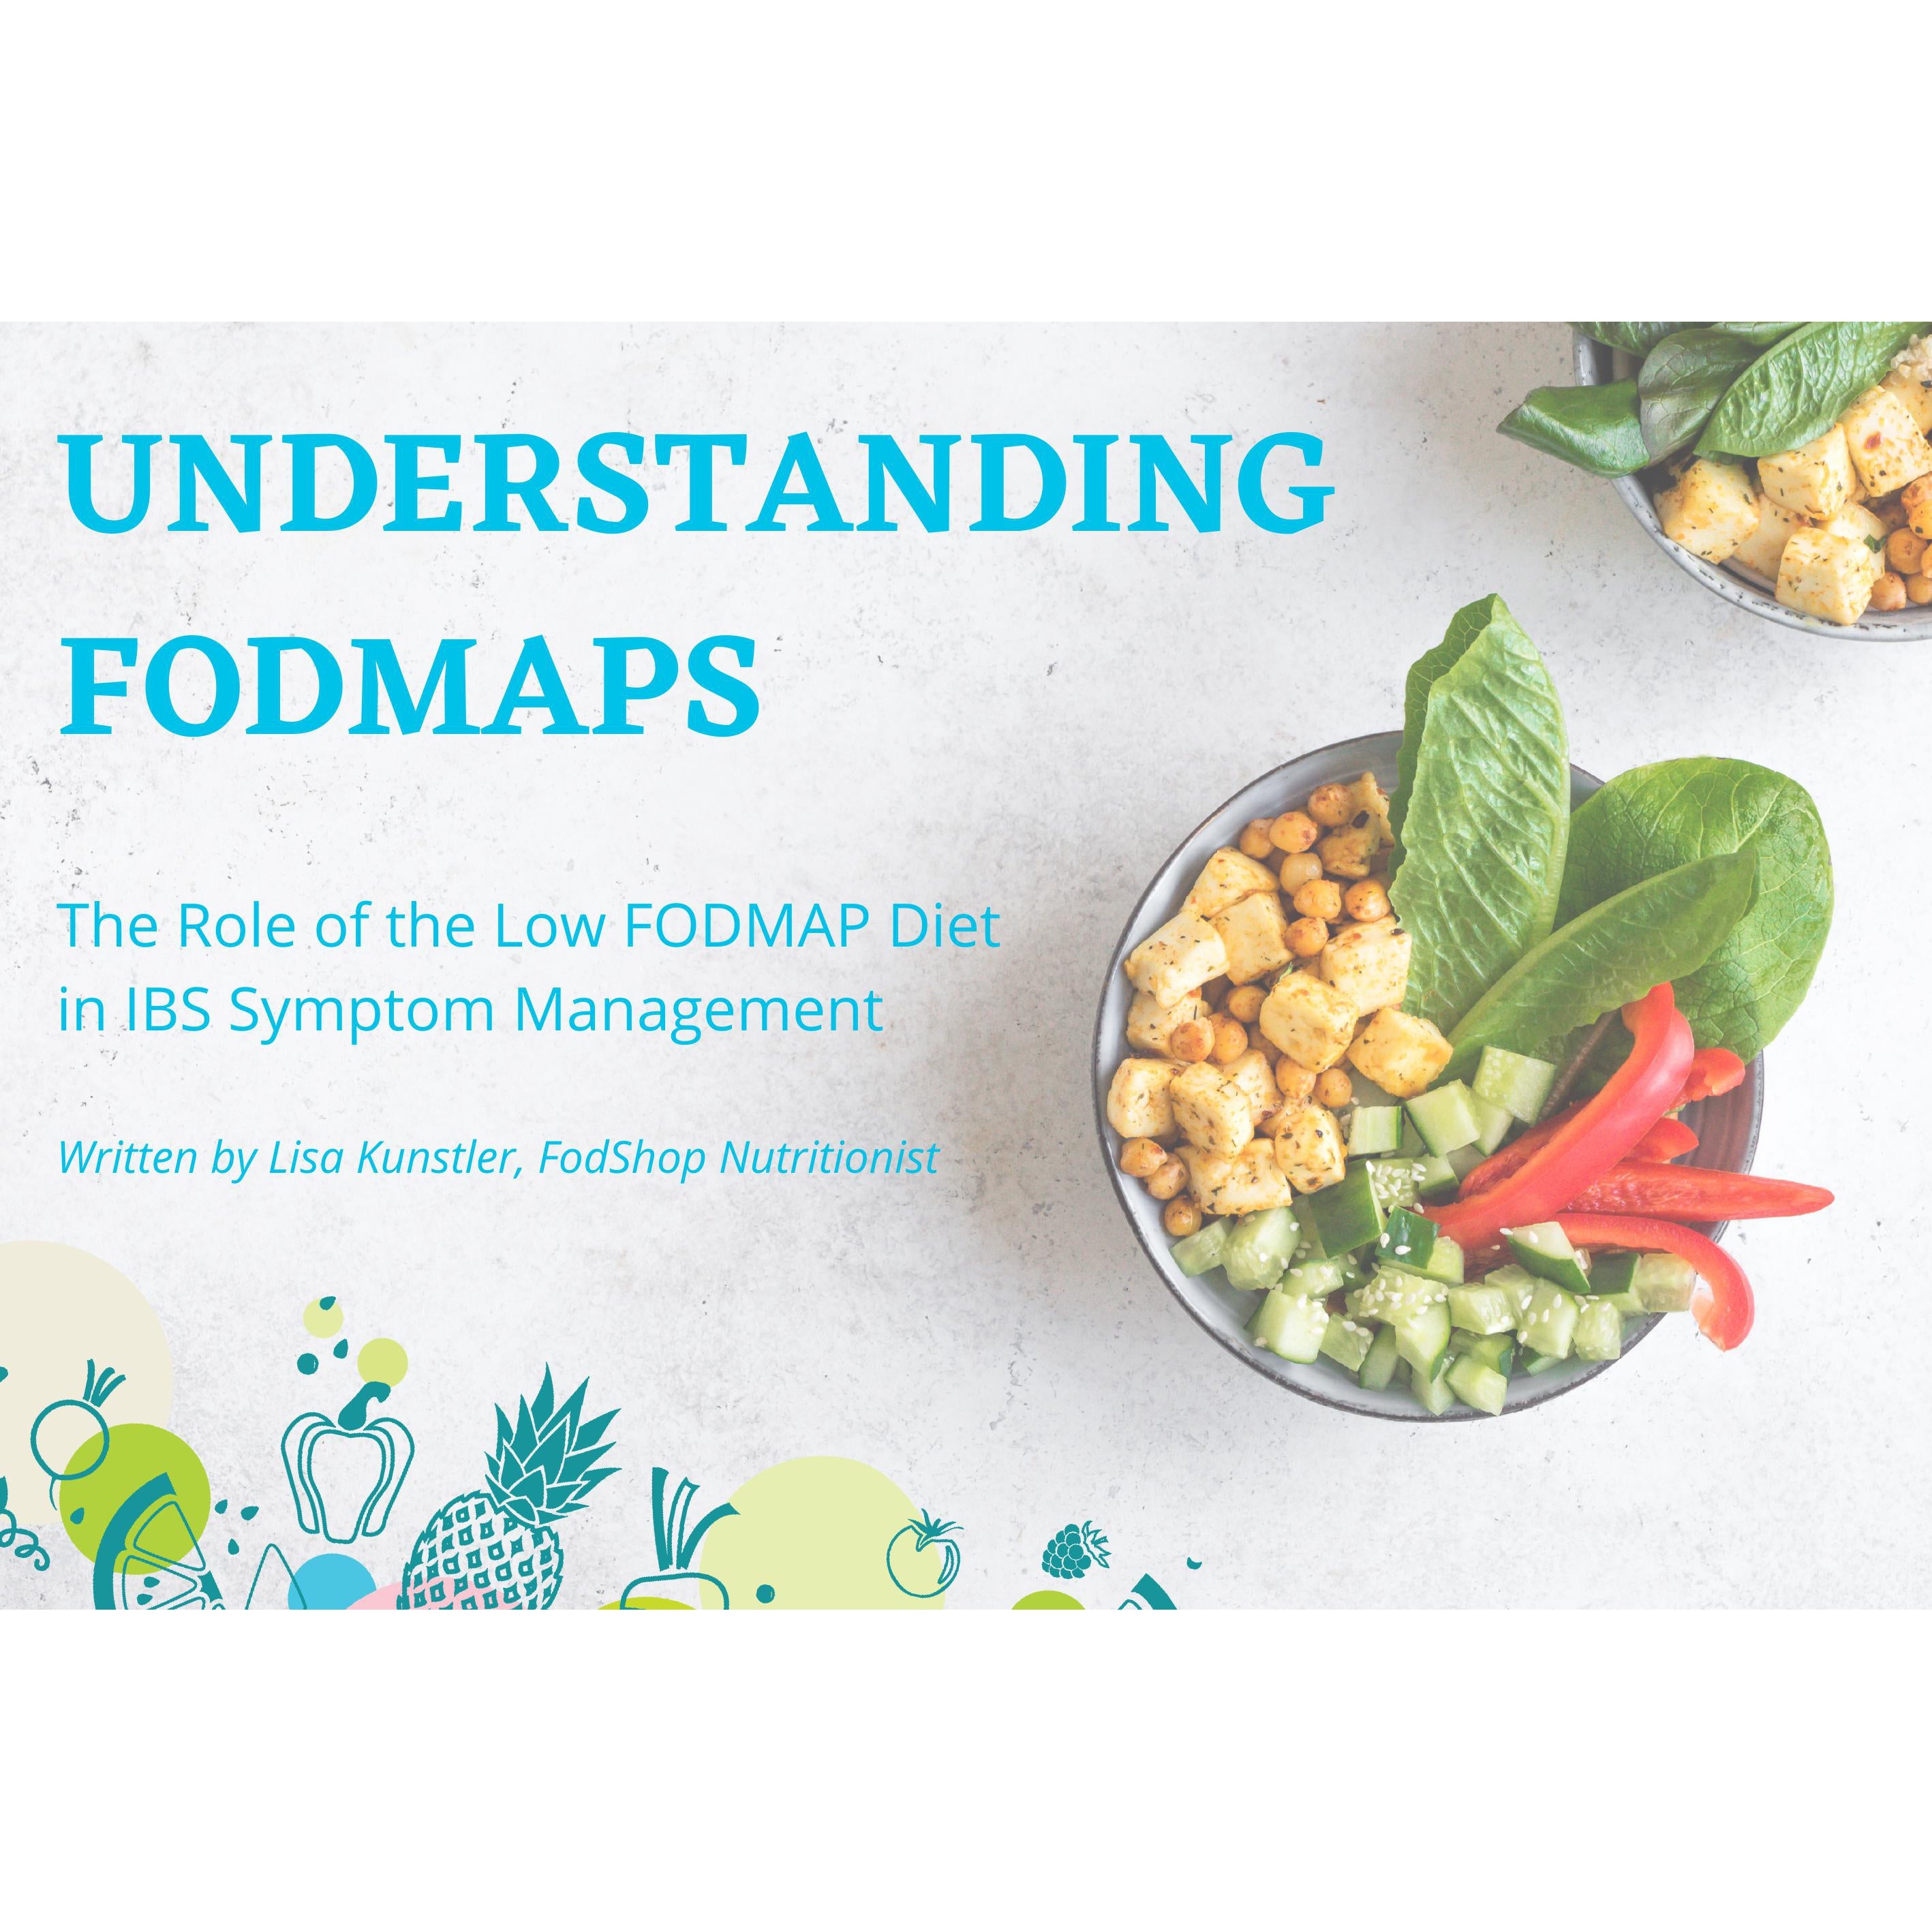 Understanding FODMAPs - The Role of the Low FODMAP Diet in IBS Symptom Management